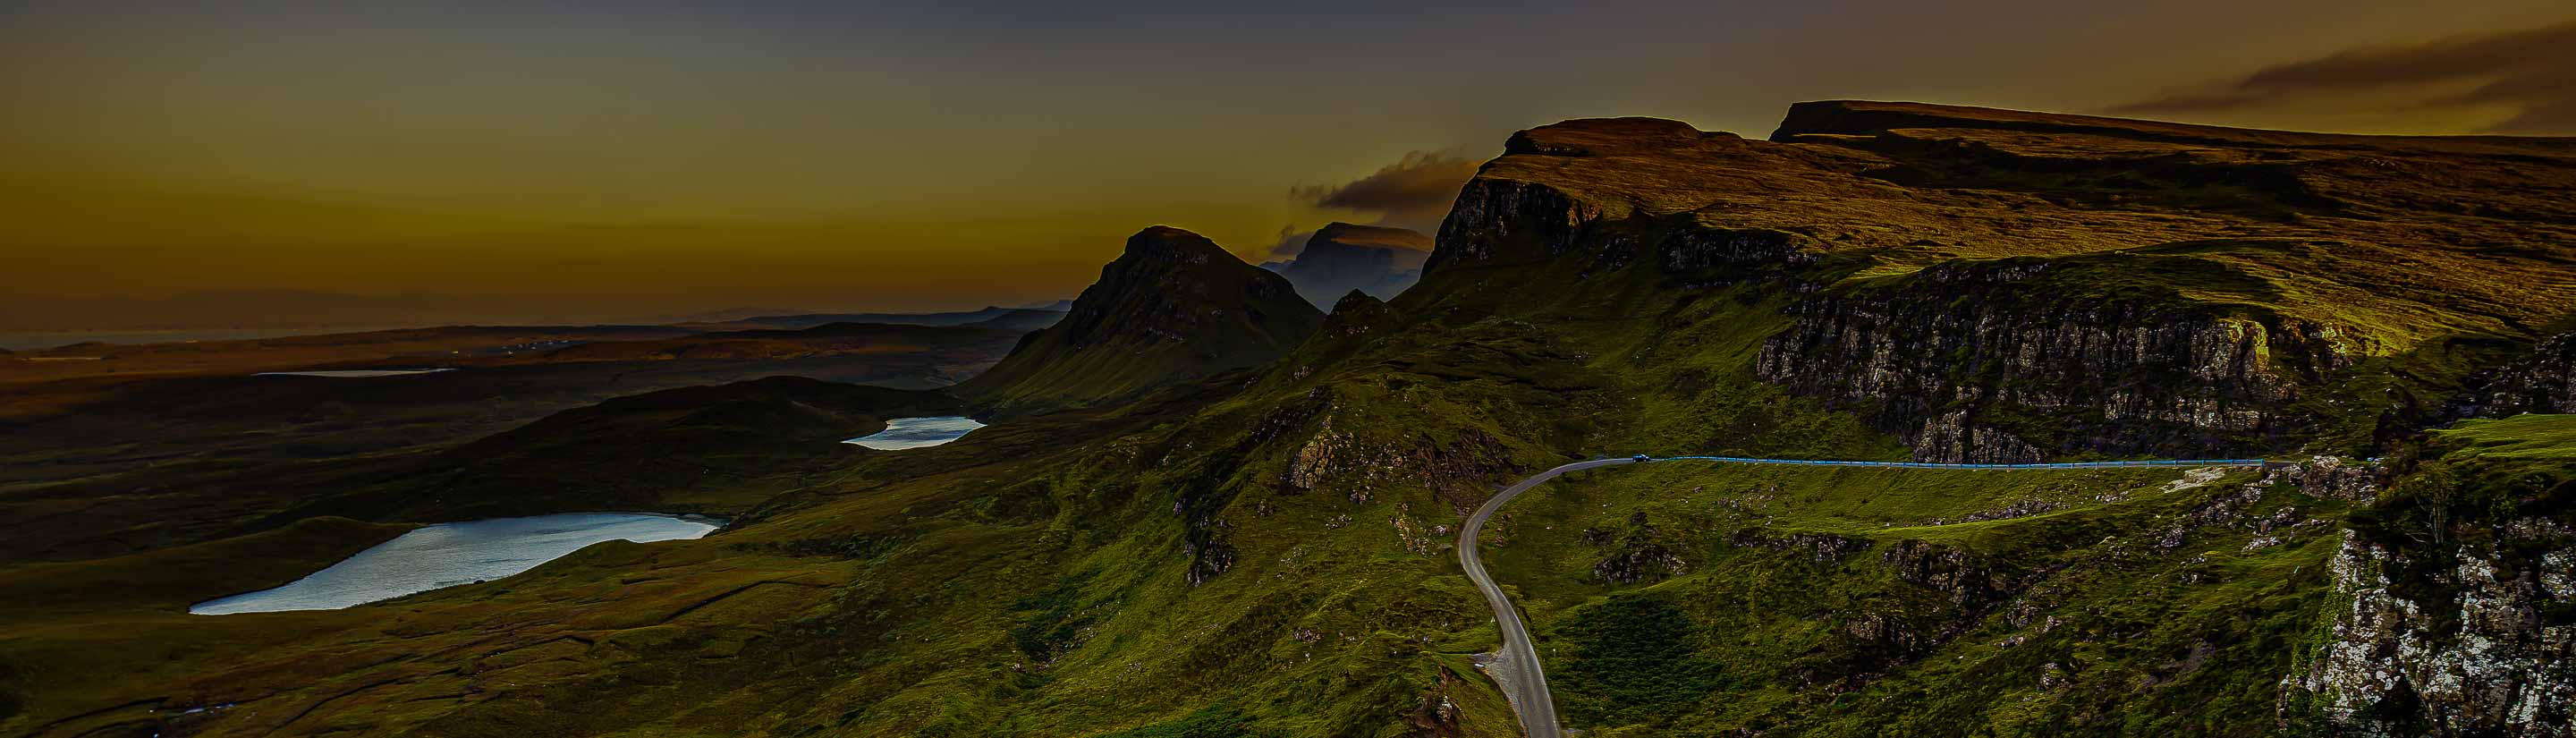 Schottland Quiraing Berge Sonnenuntergang